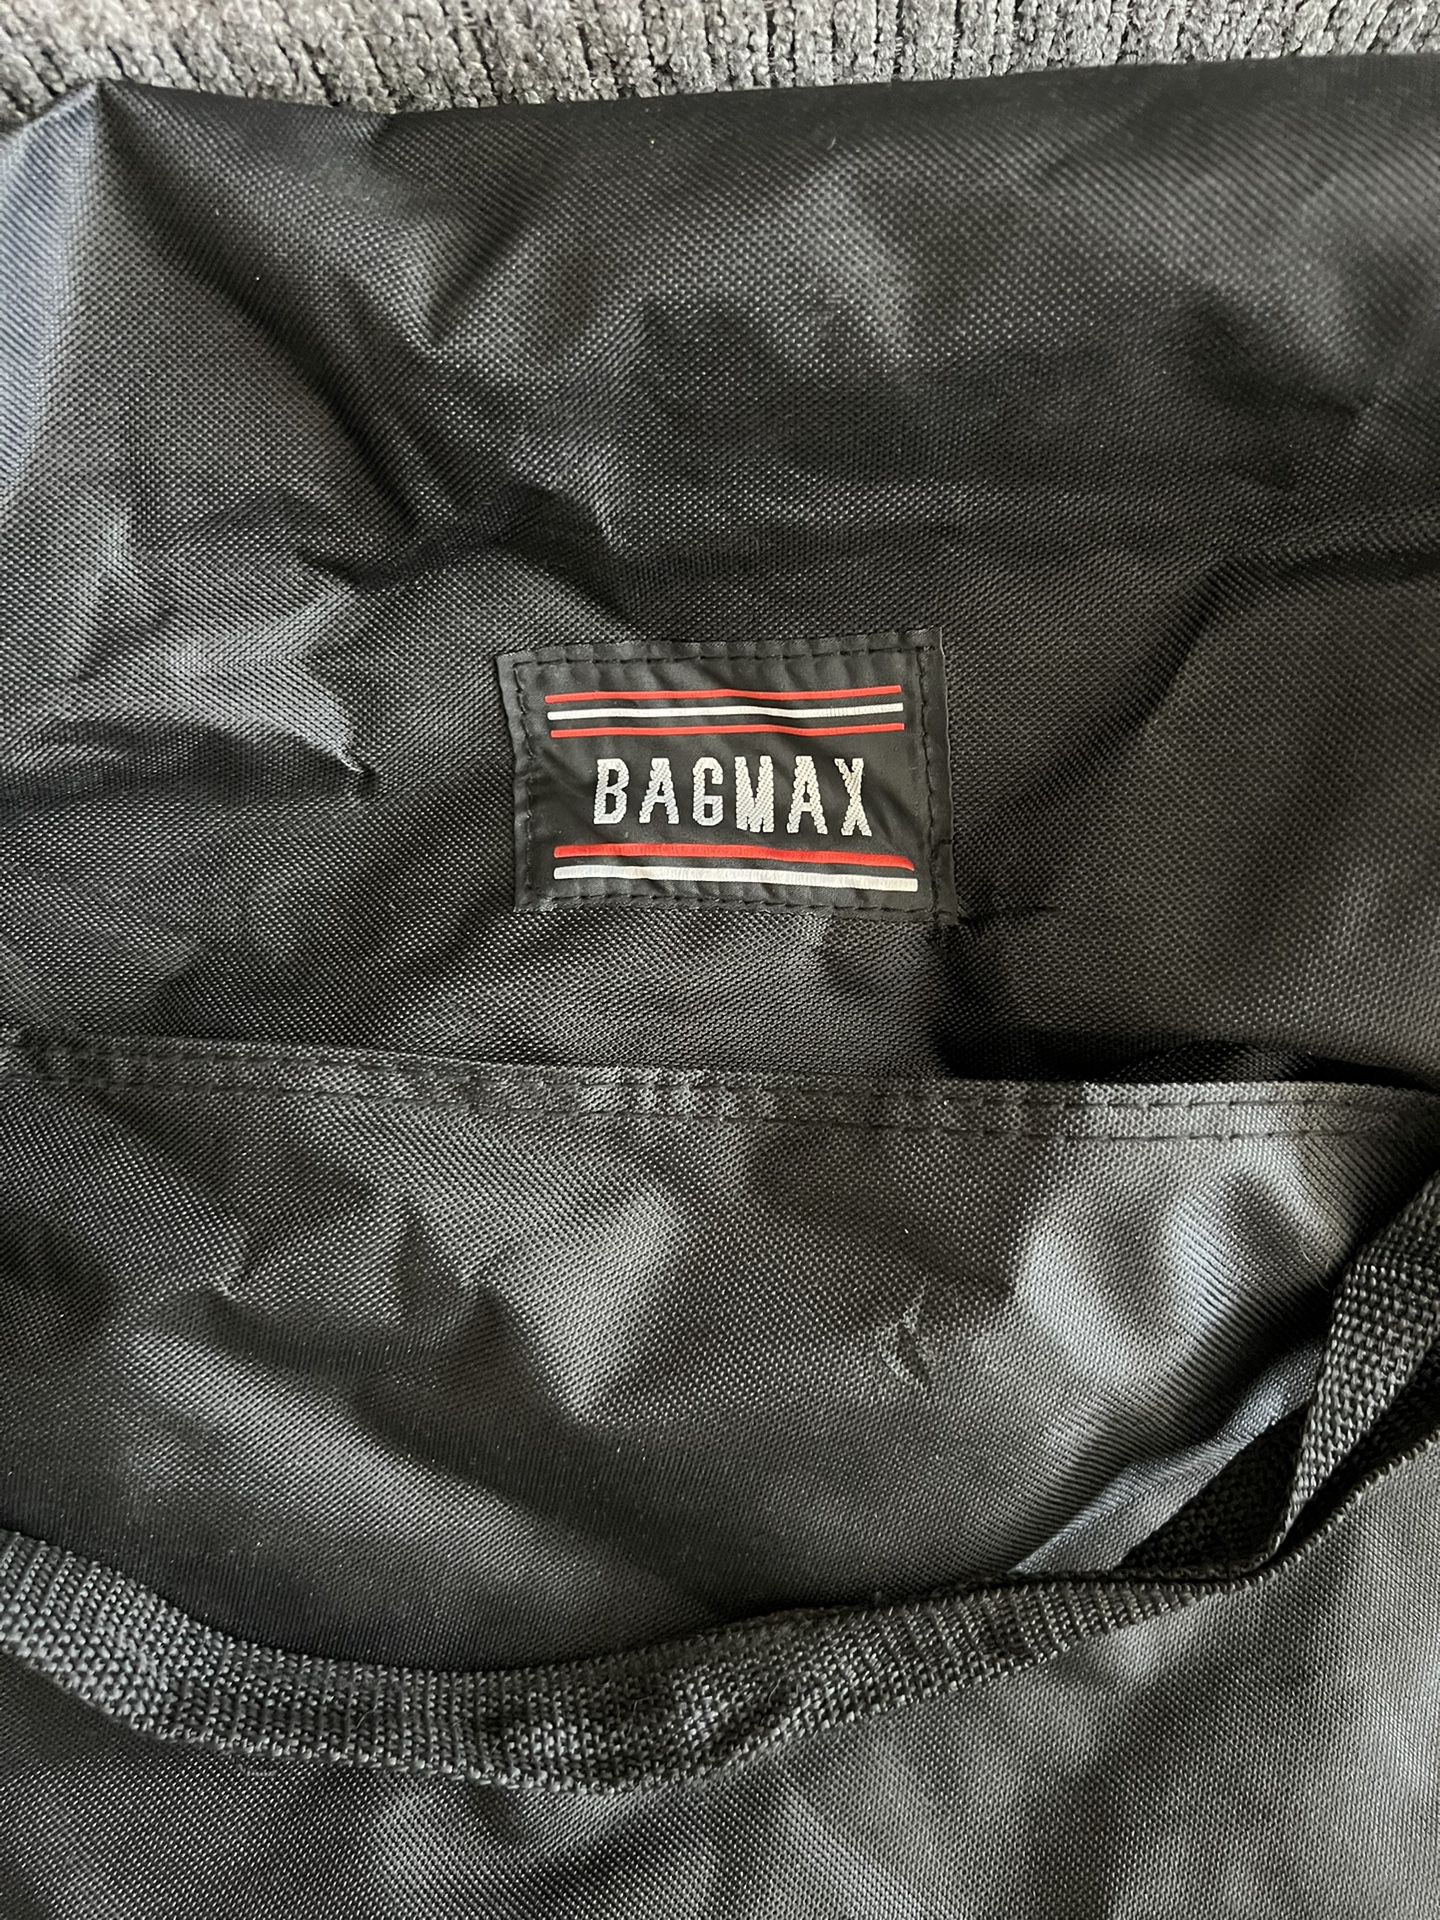 Bag Max Medium Size Bag